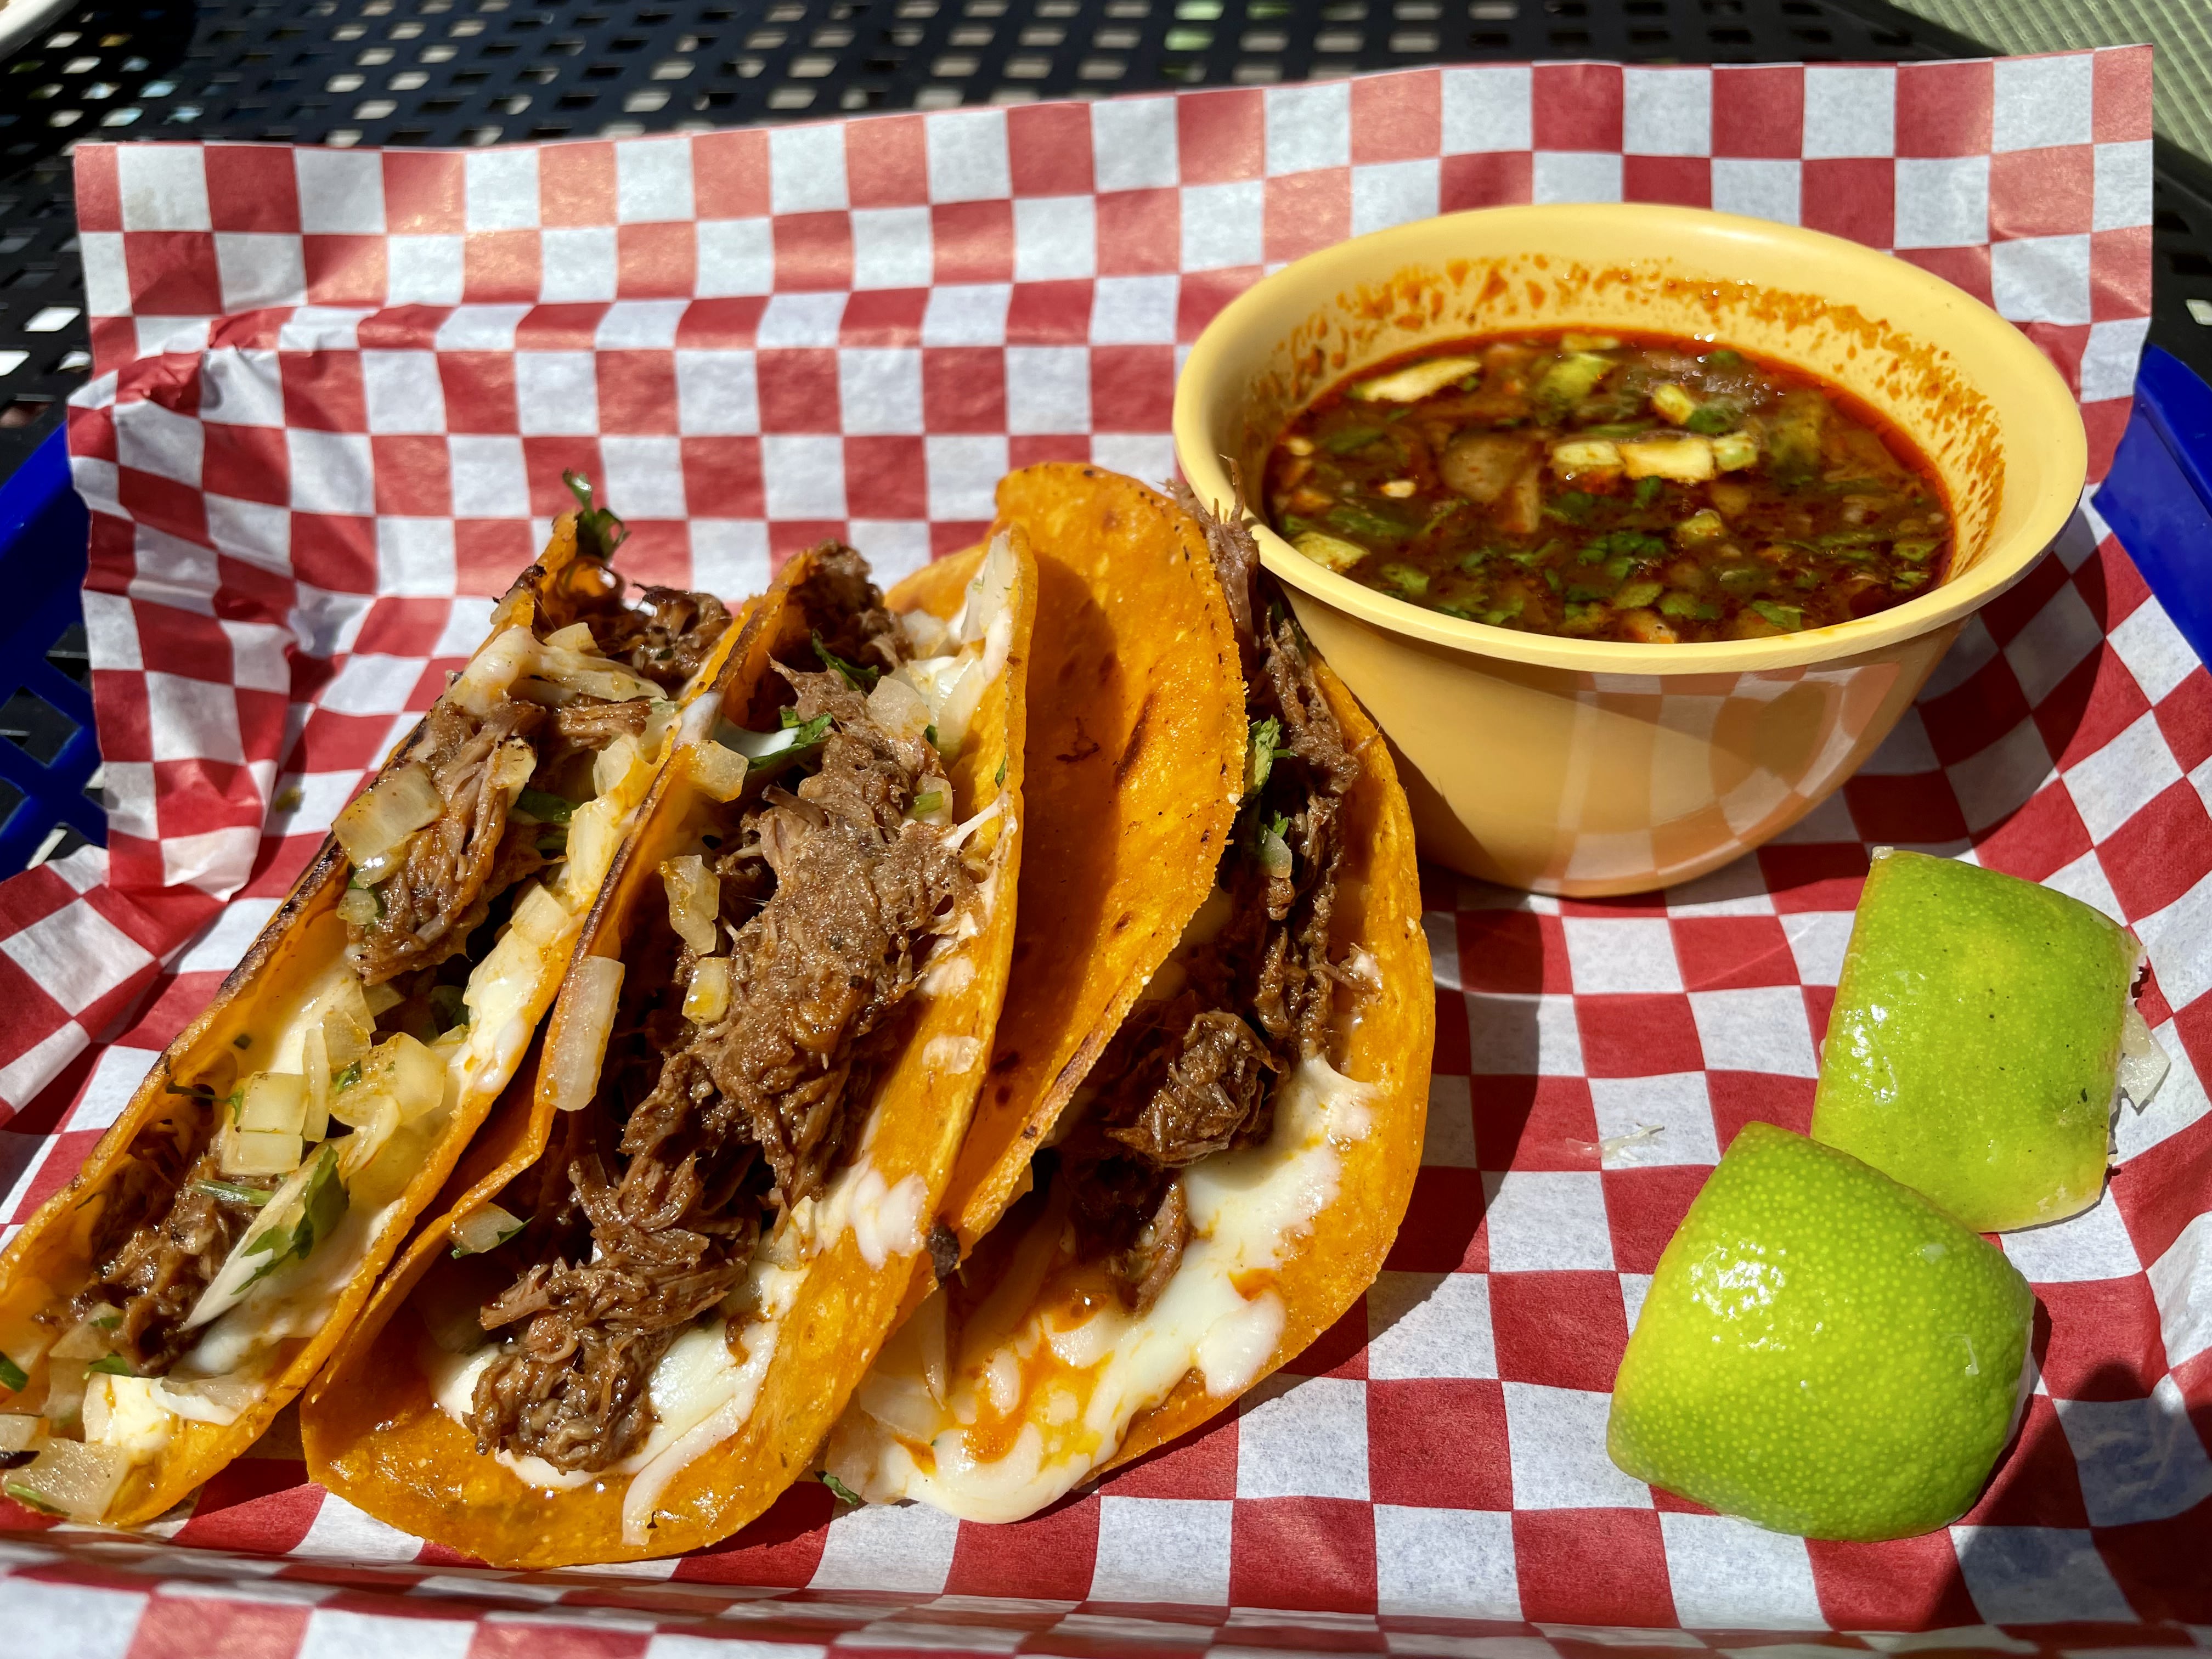 Best Atlanta dishes: Tacos de birria at Frida's Taqueria in Lilburn